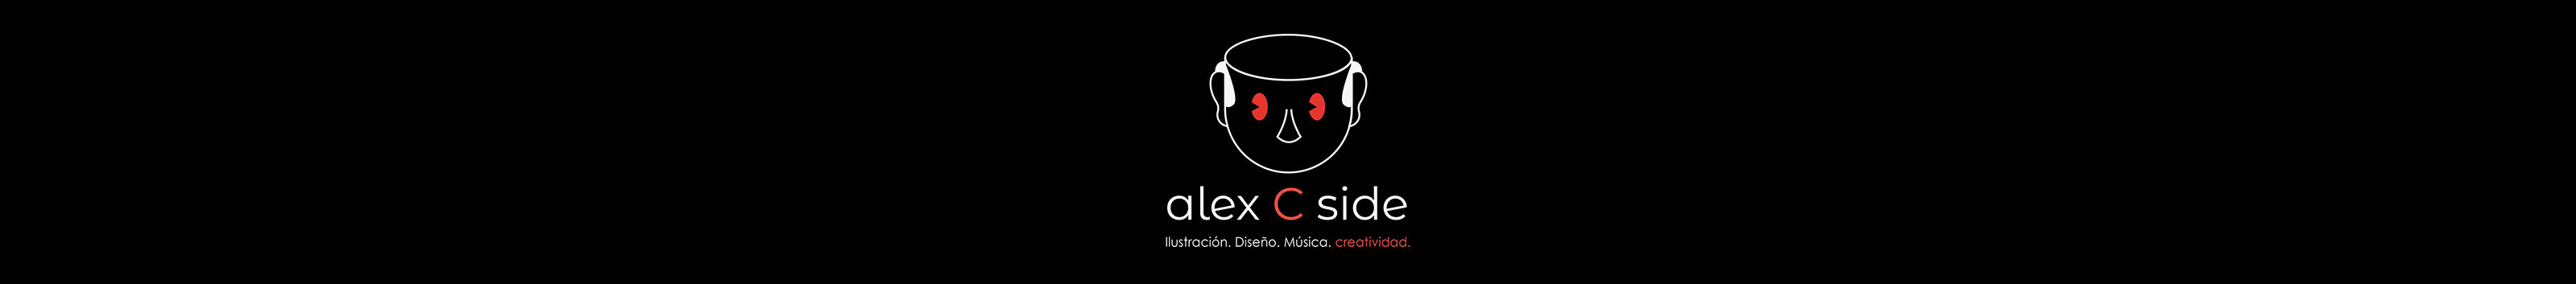 Alex C Side's profile banner